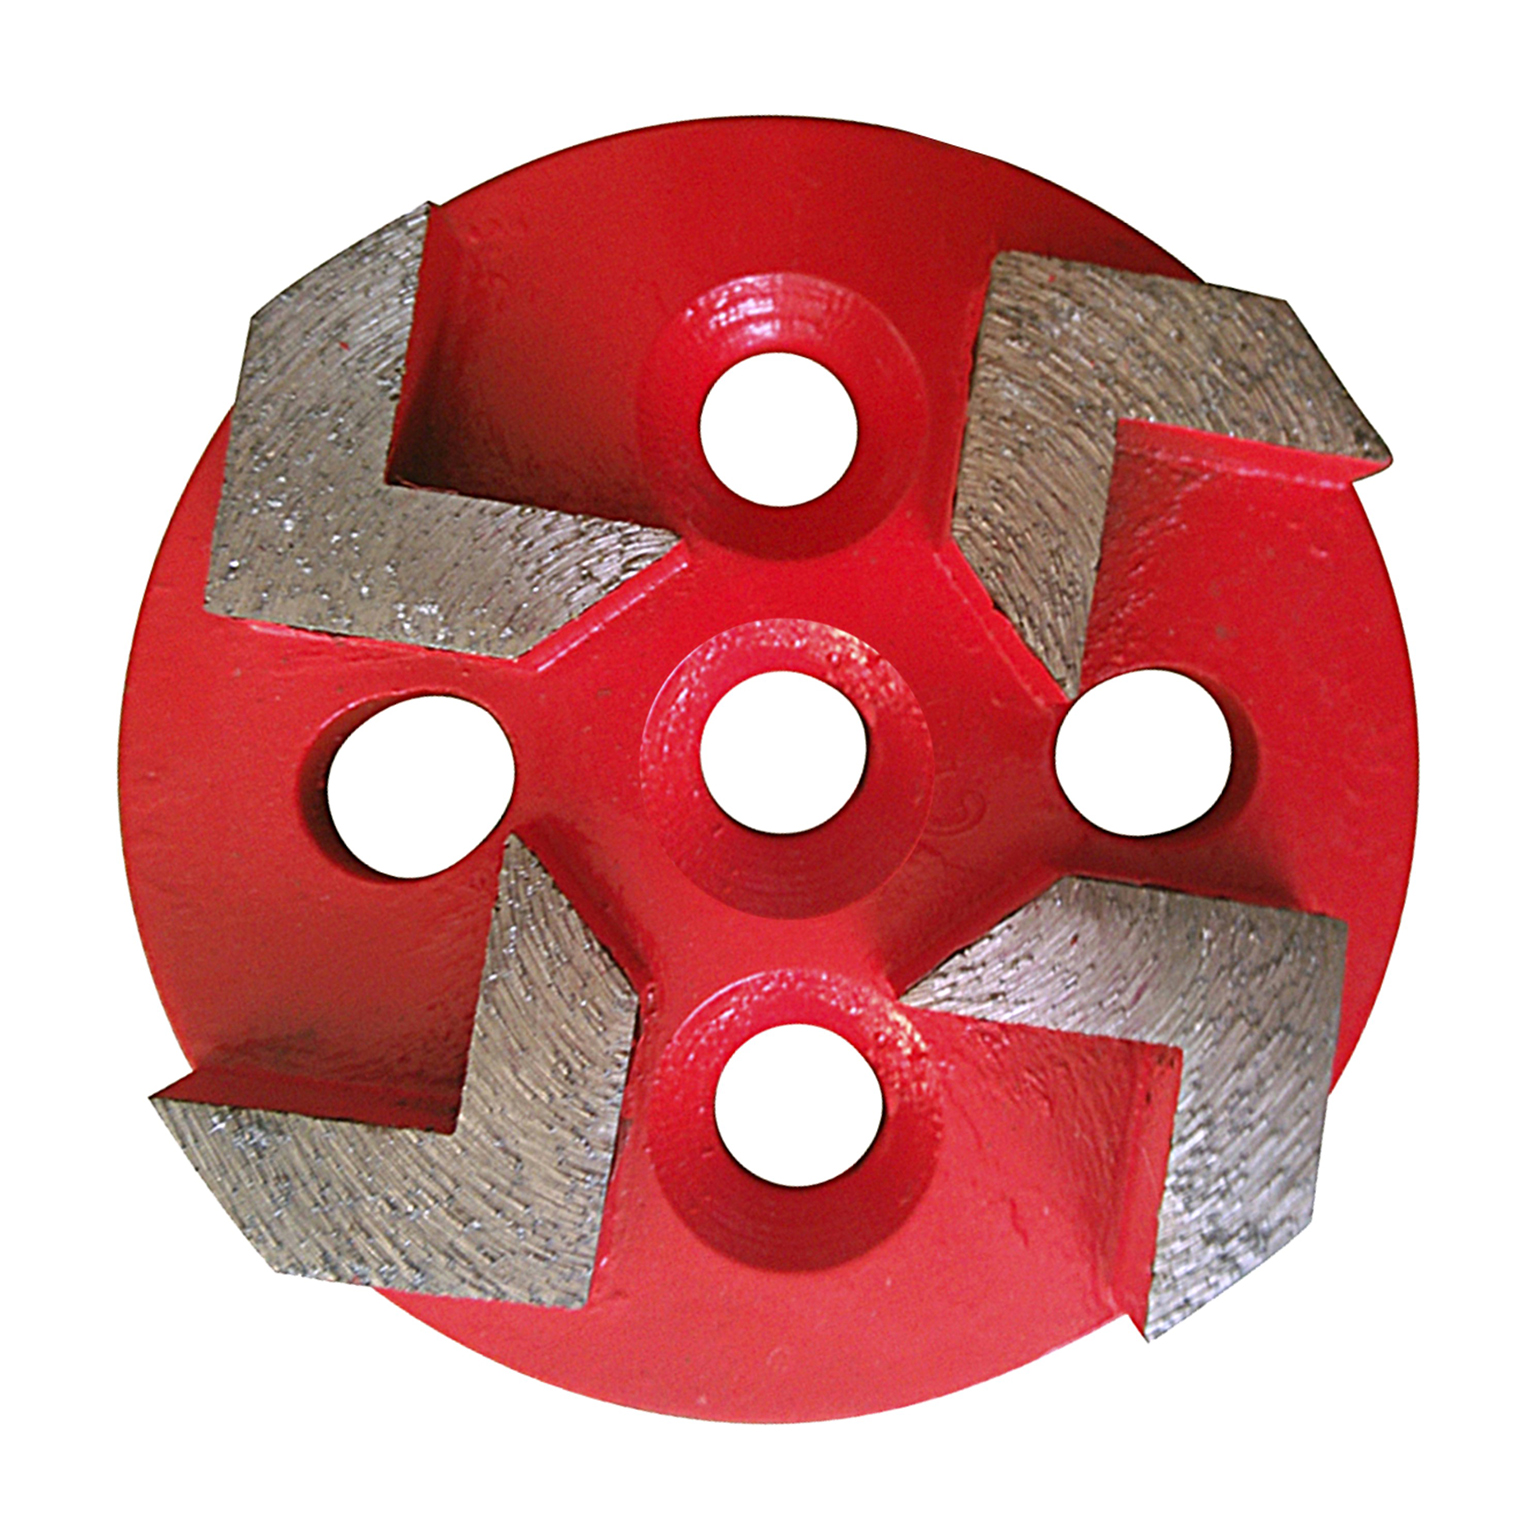 Circular grinding plate